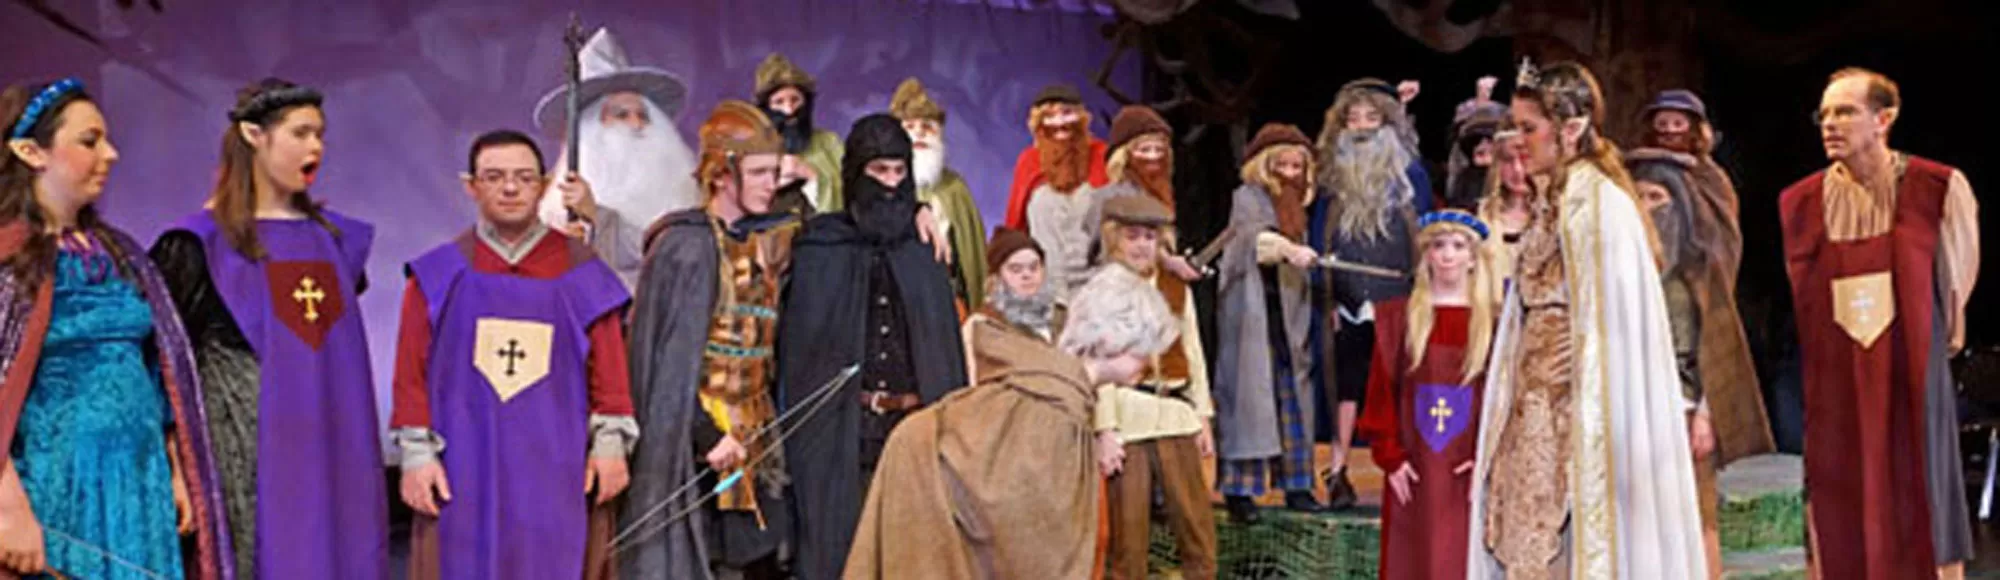 Conejo Theatre for Everyone presents The Hobbit